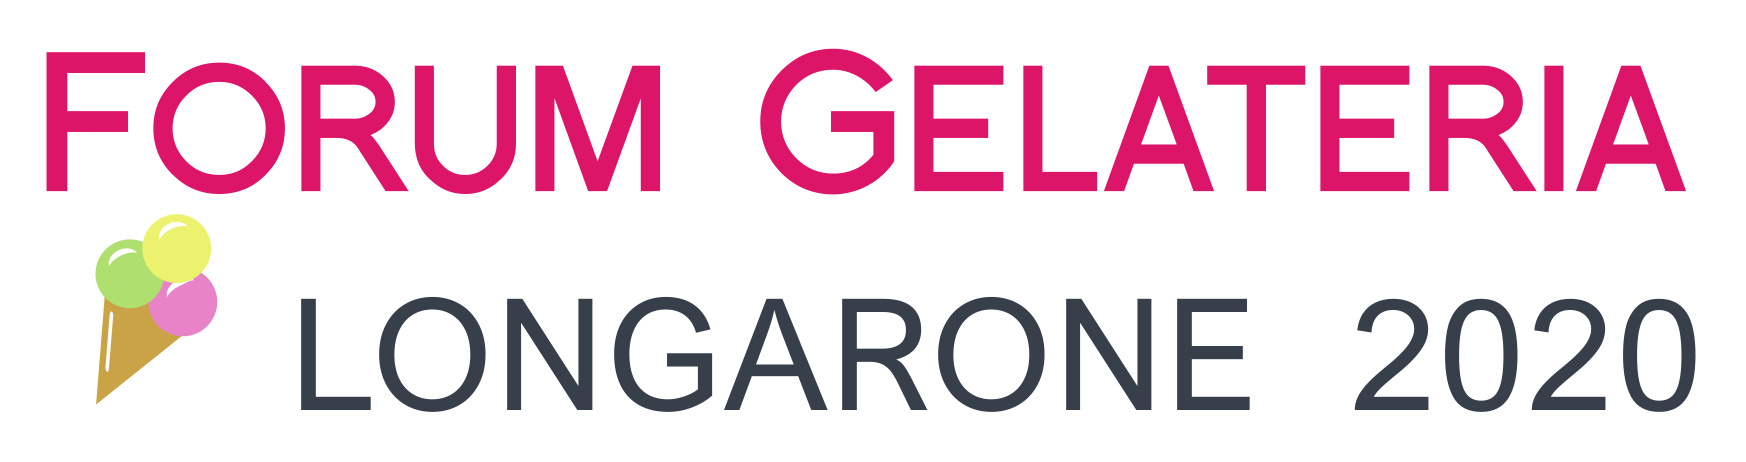 forum gelateria logo